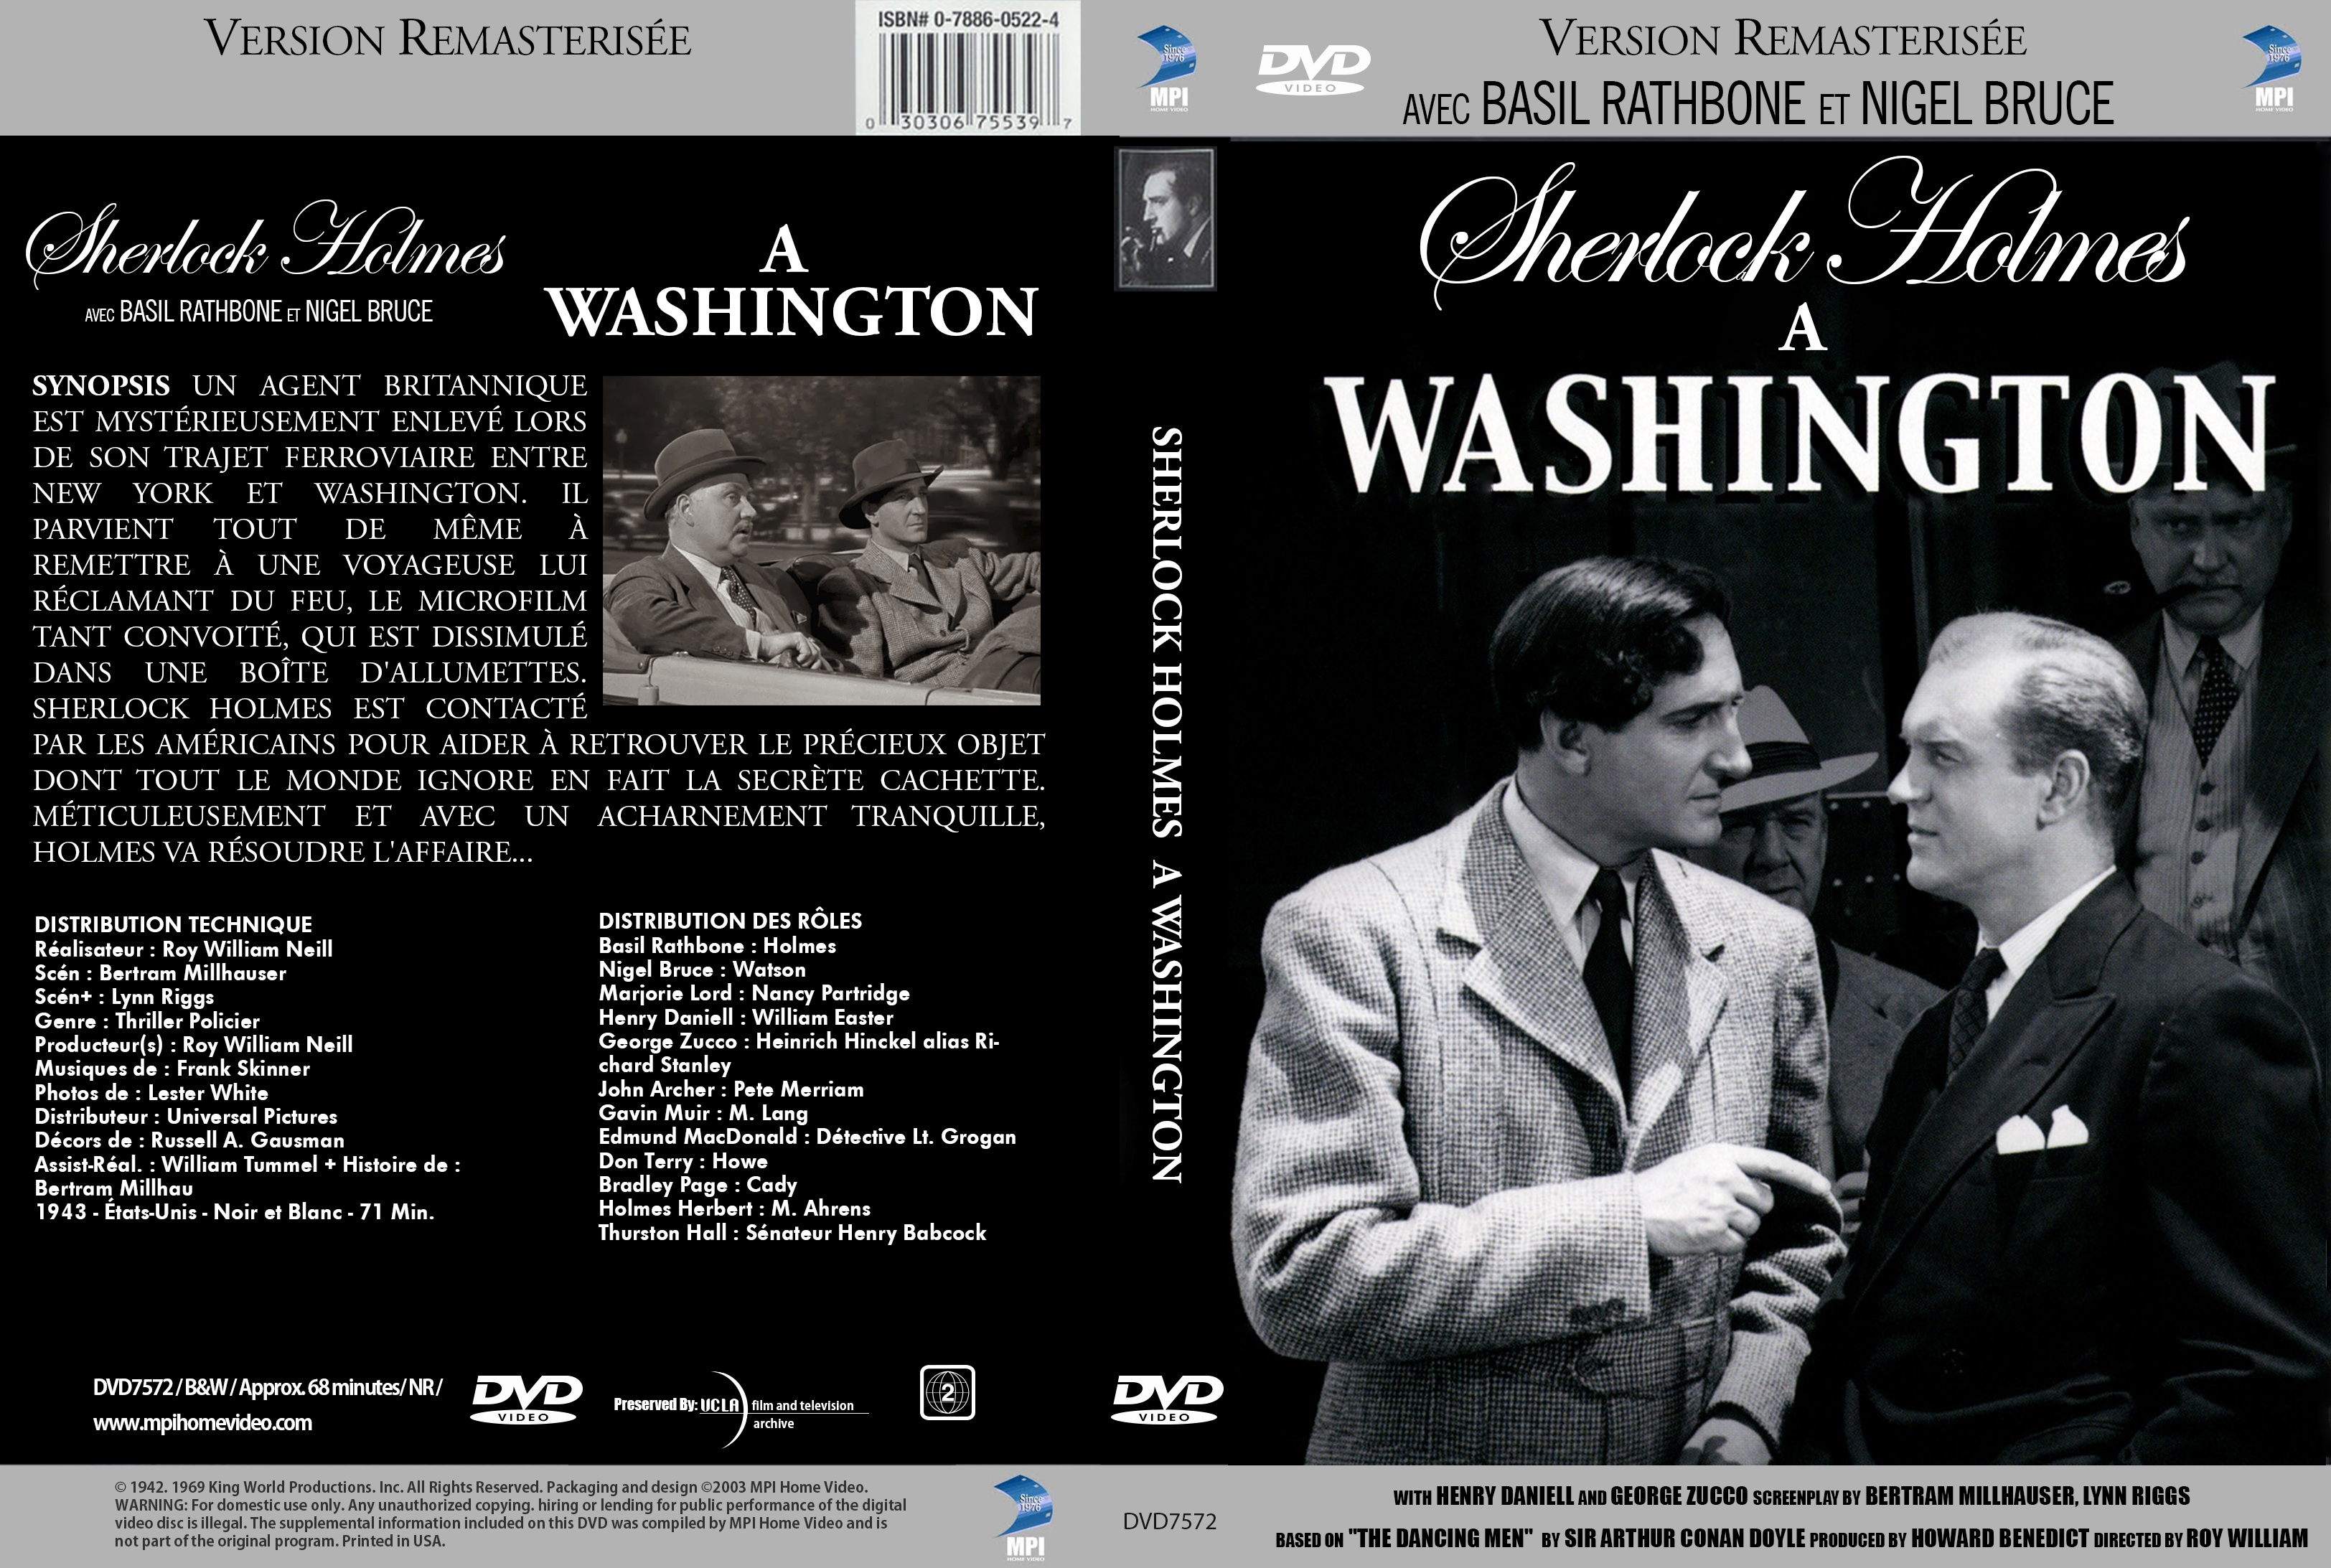 Jaquette DVD Sherlock Holmes  Washington custom